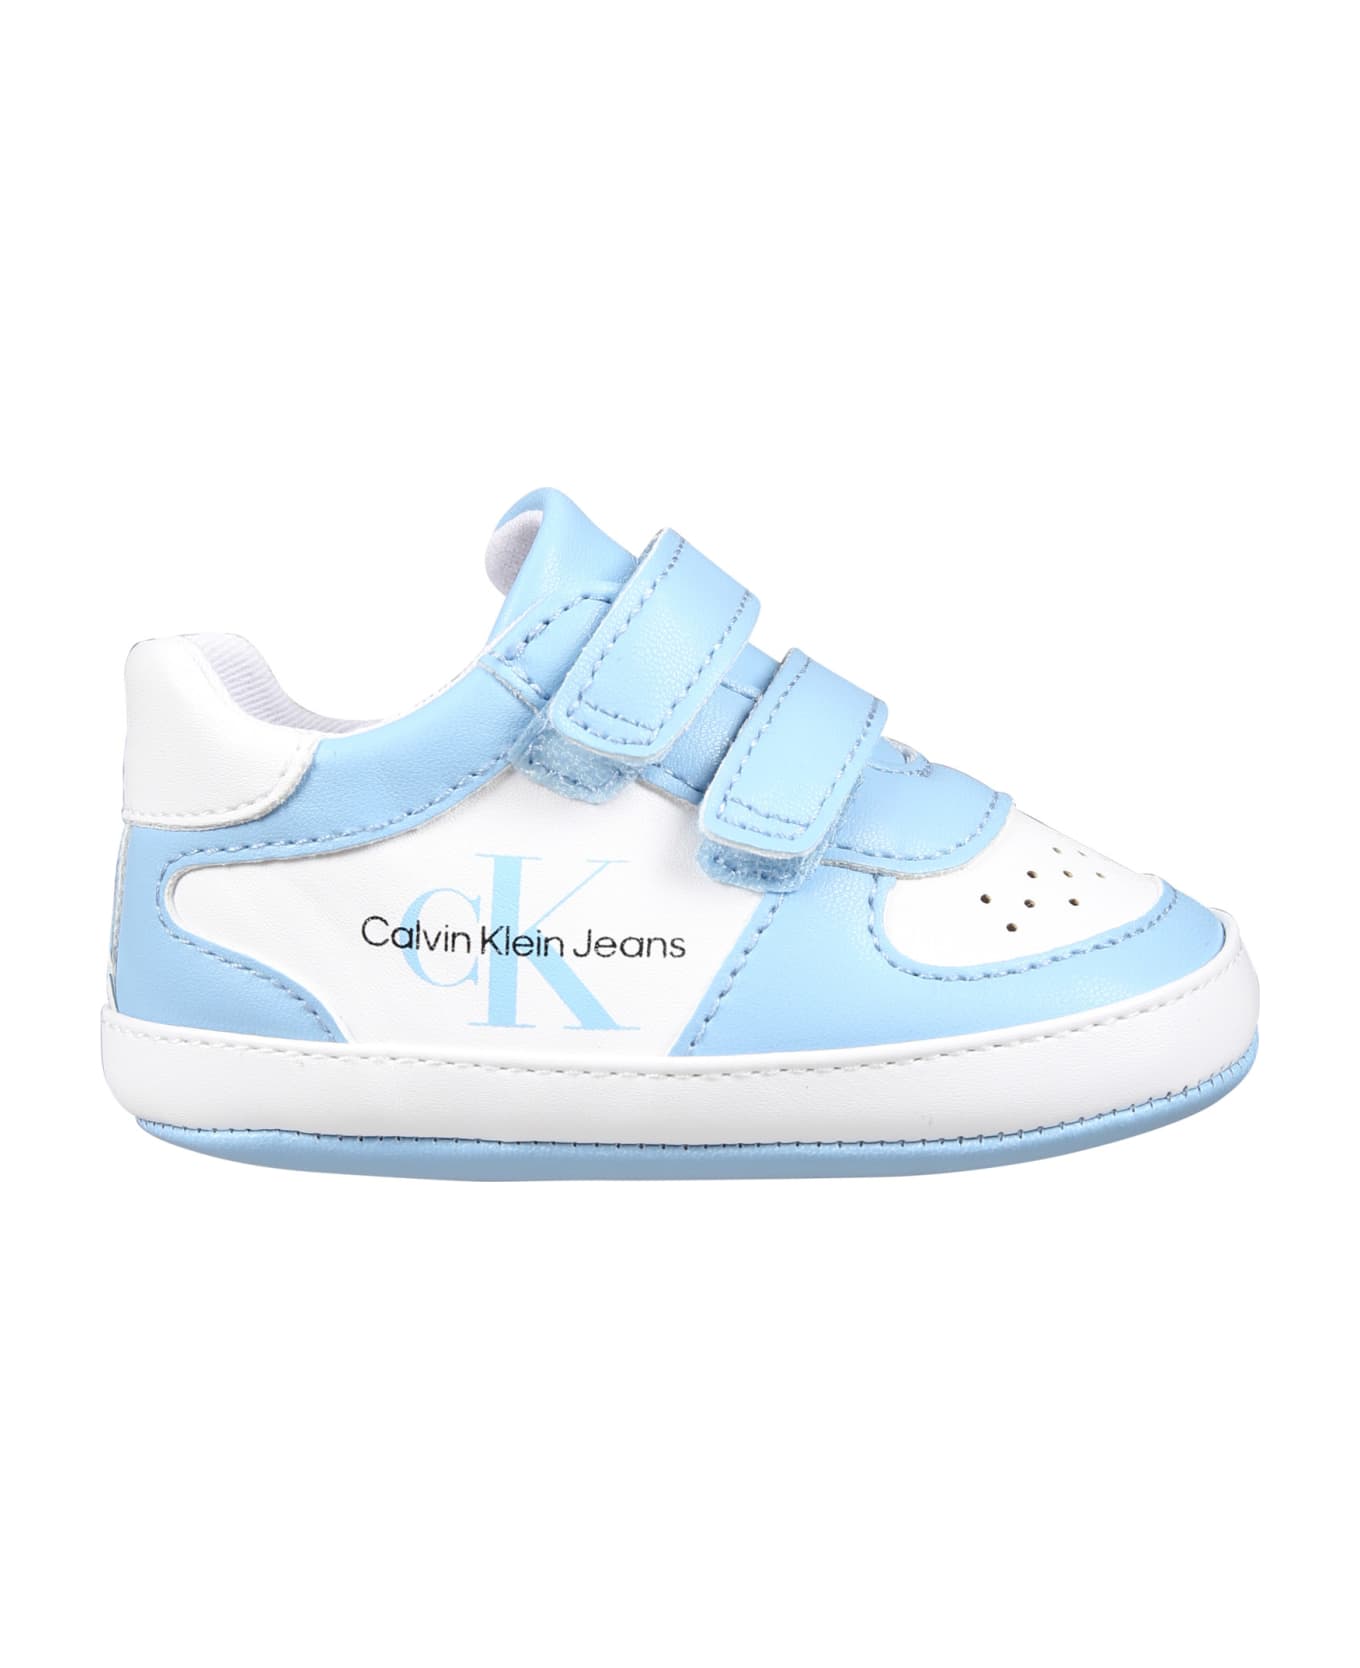 Calvin Klein Light Blue Sneakers For Baby Boy With Logo - Light Blue シューズ